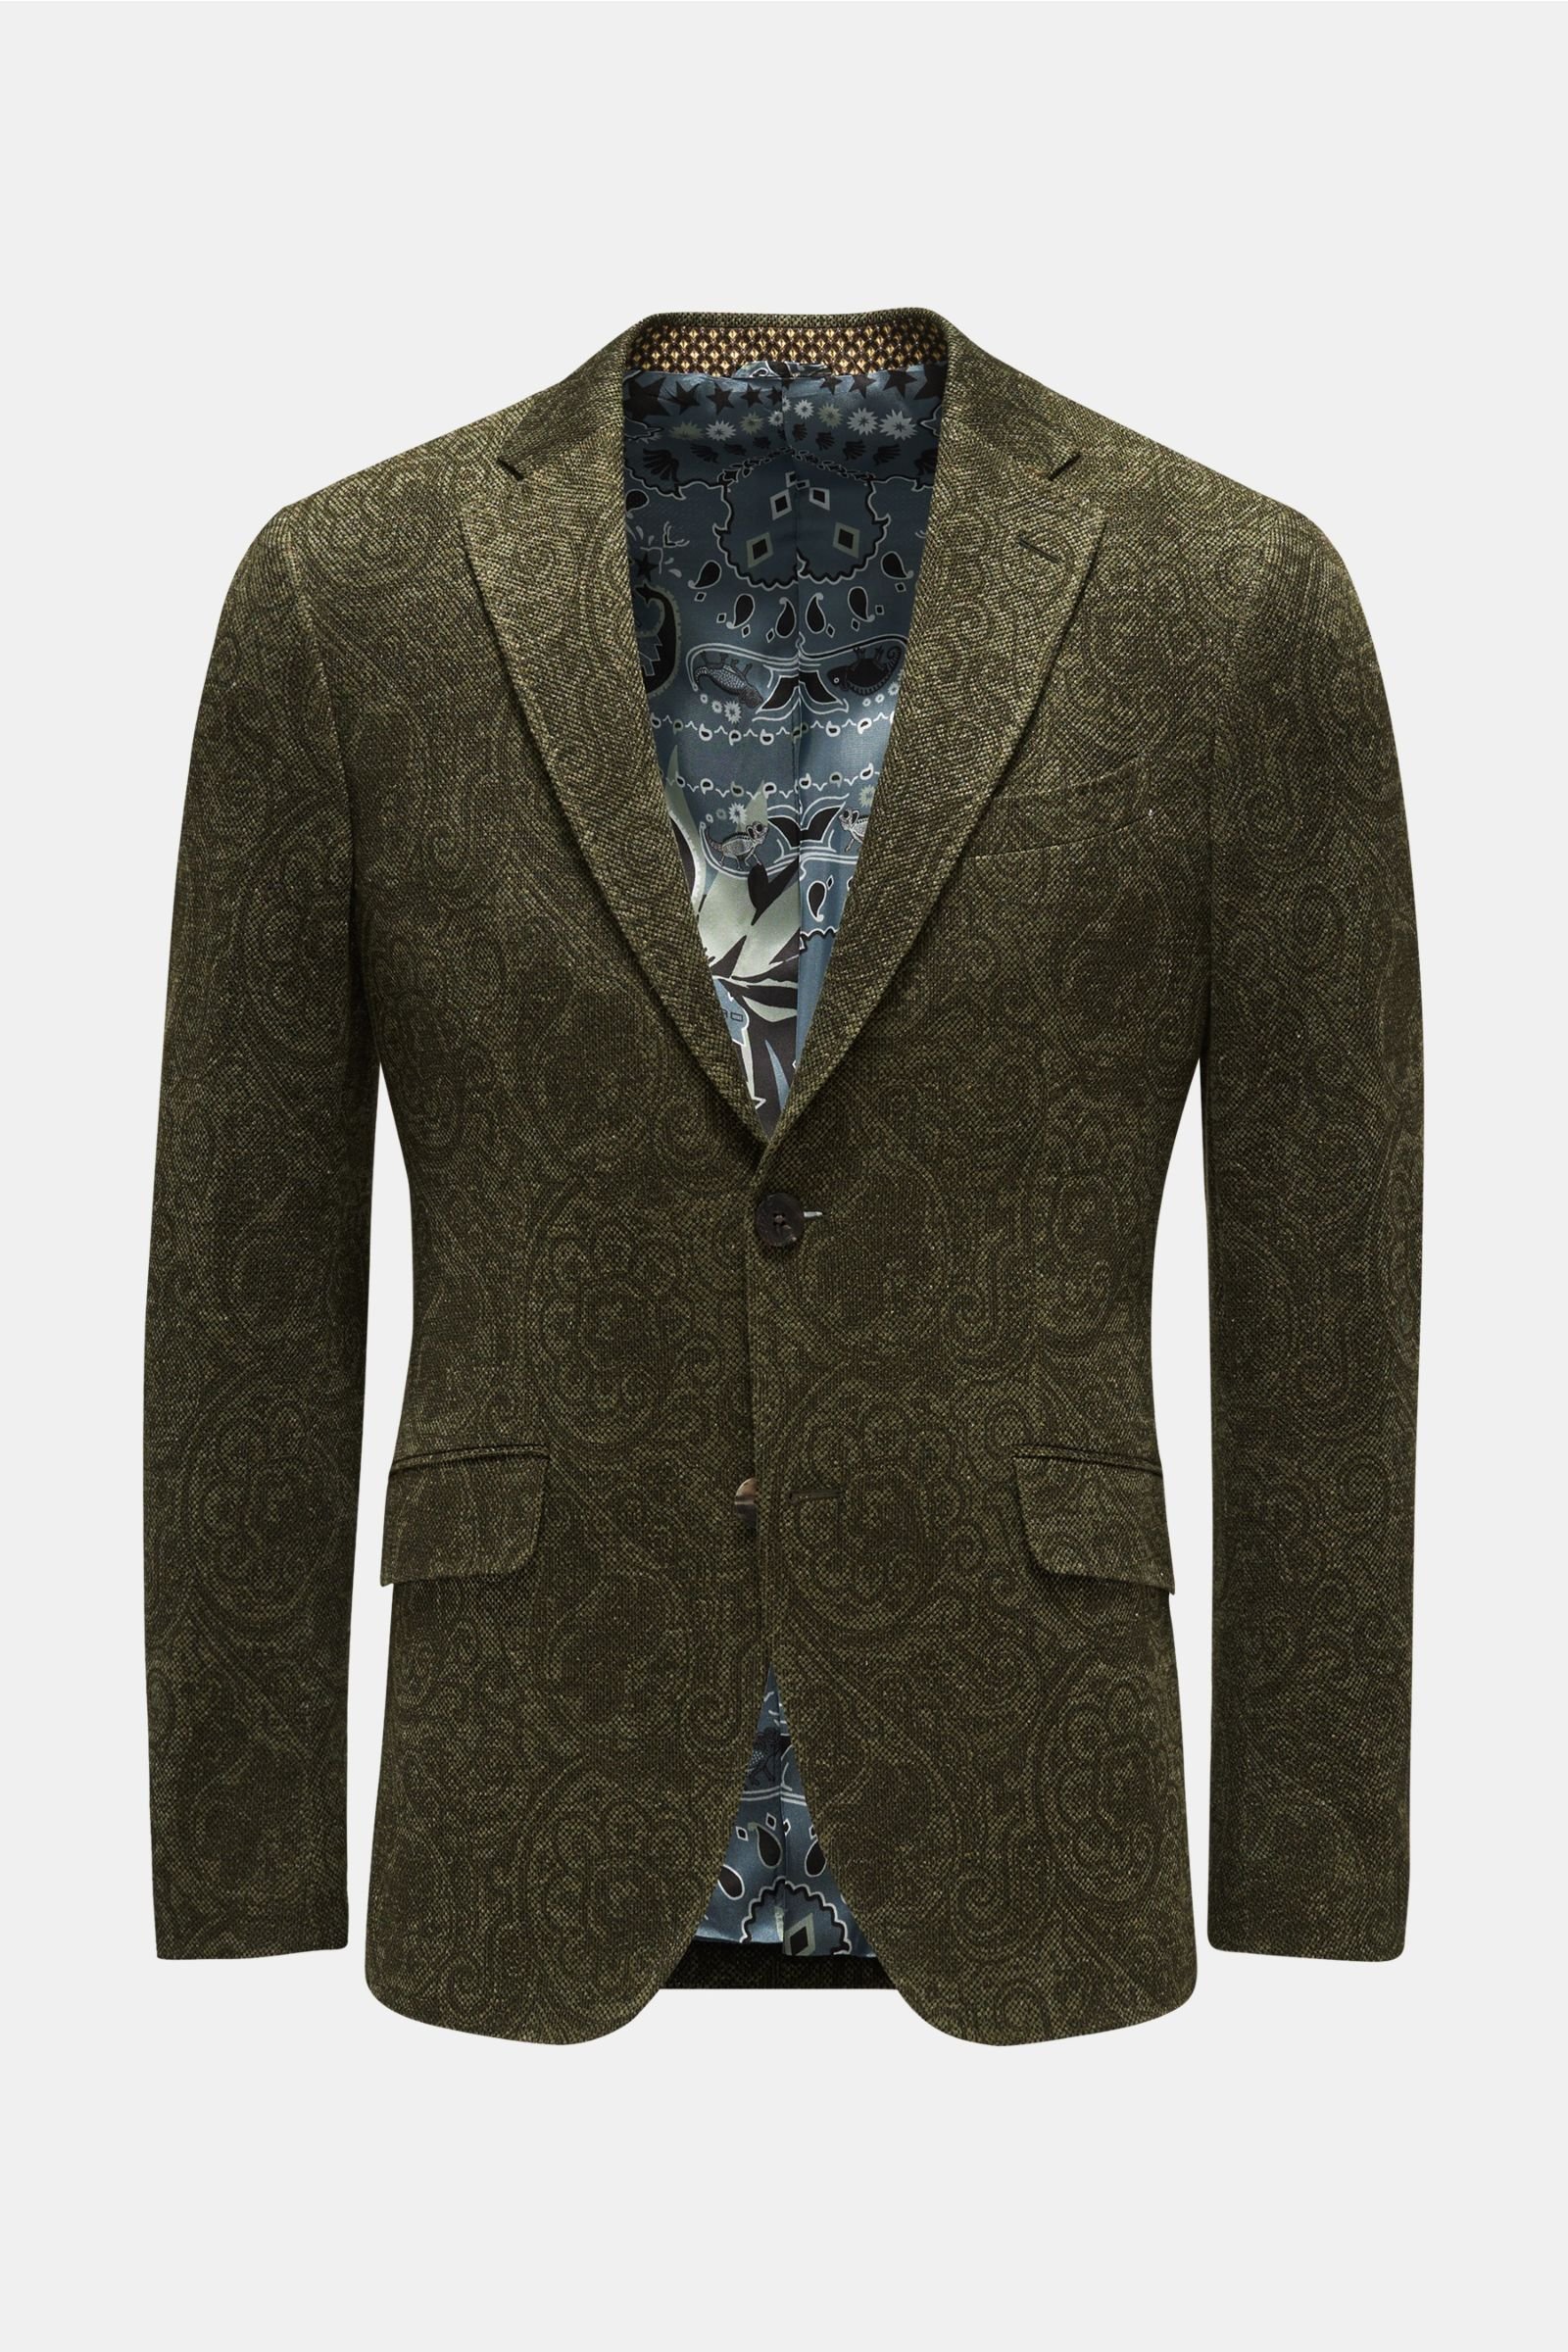 Smart-casual jacket olive patterned